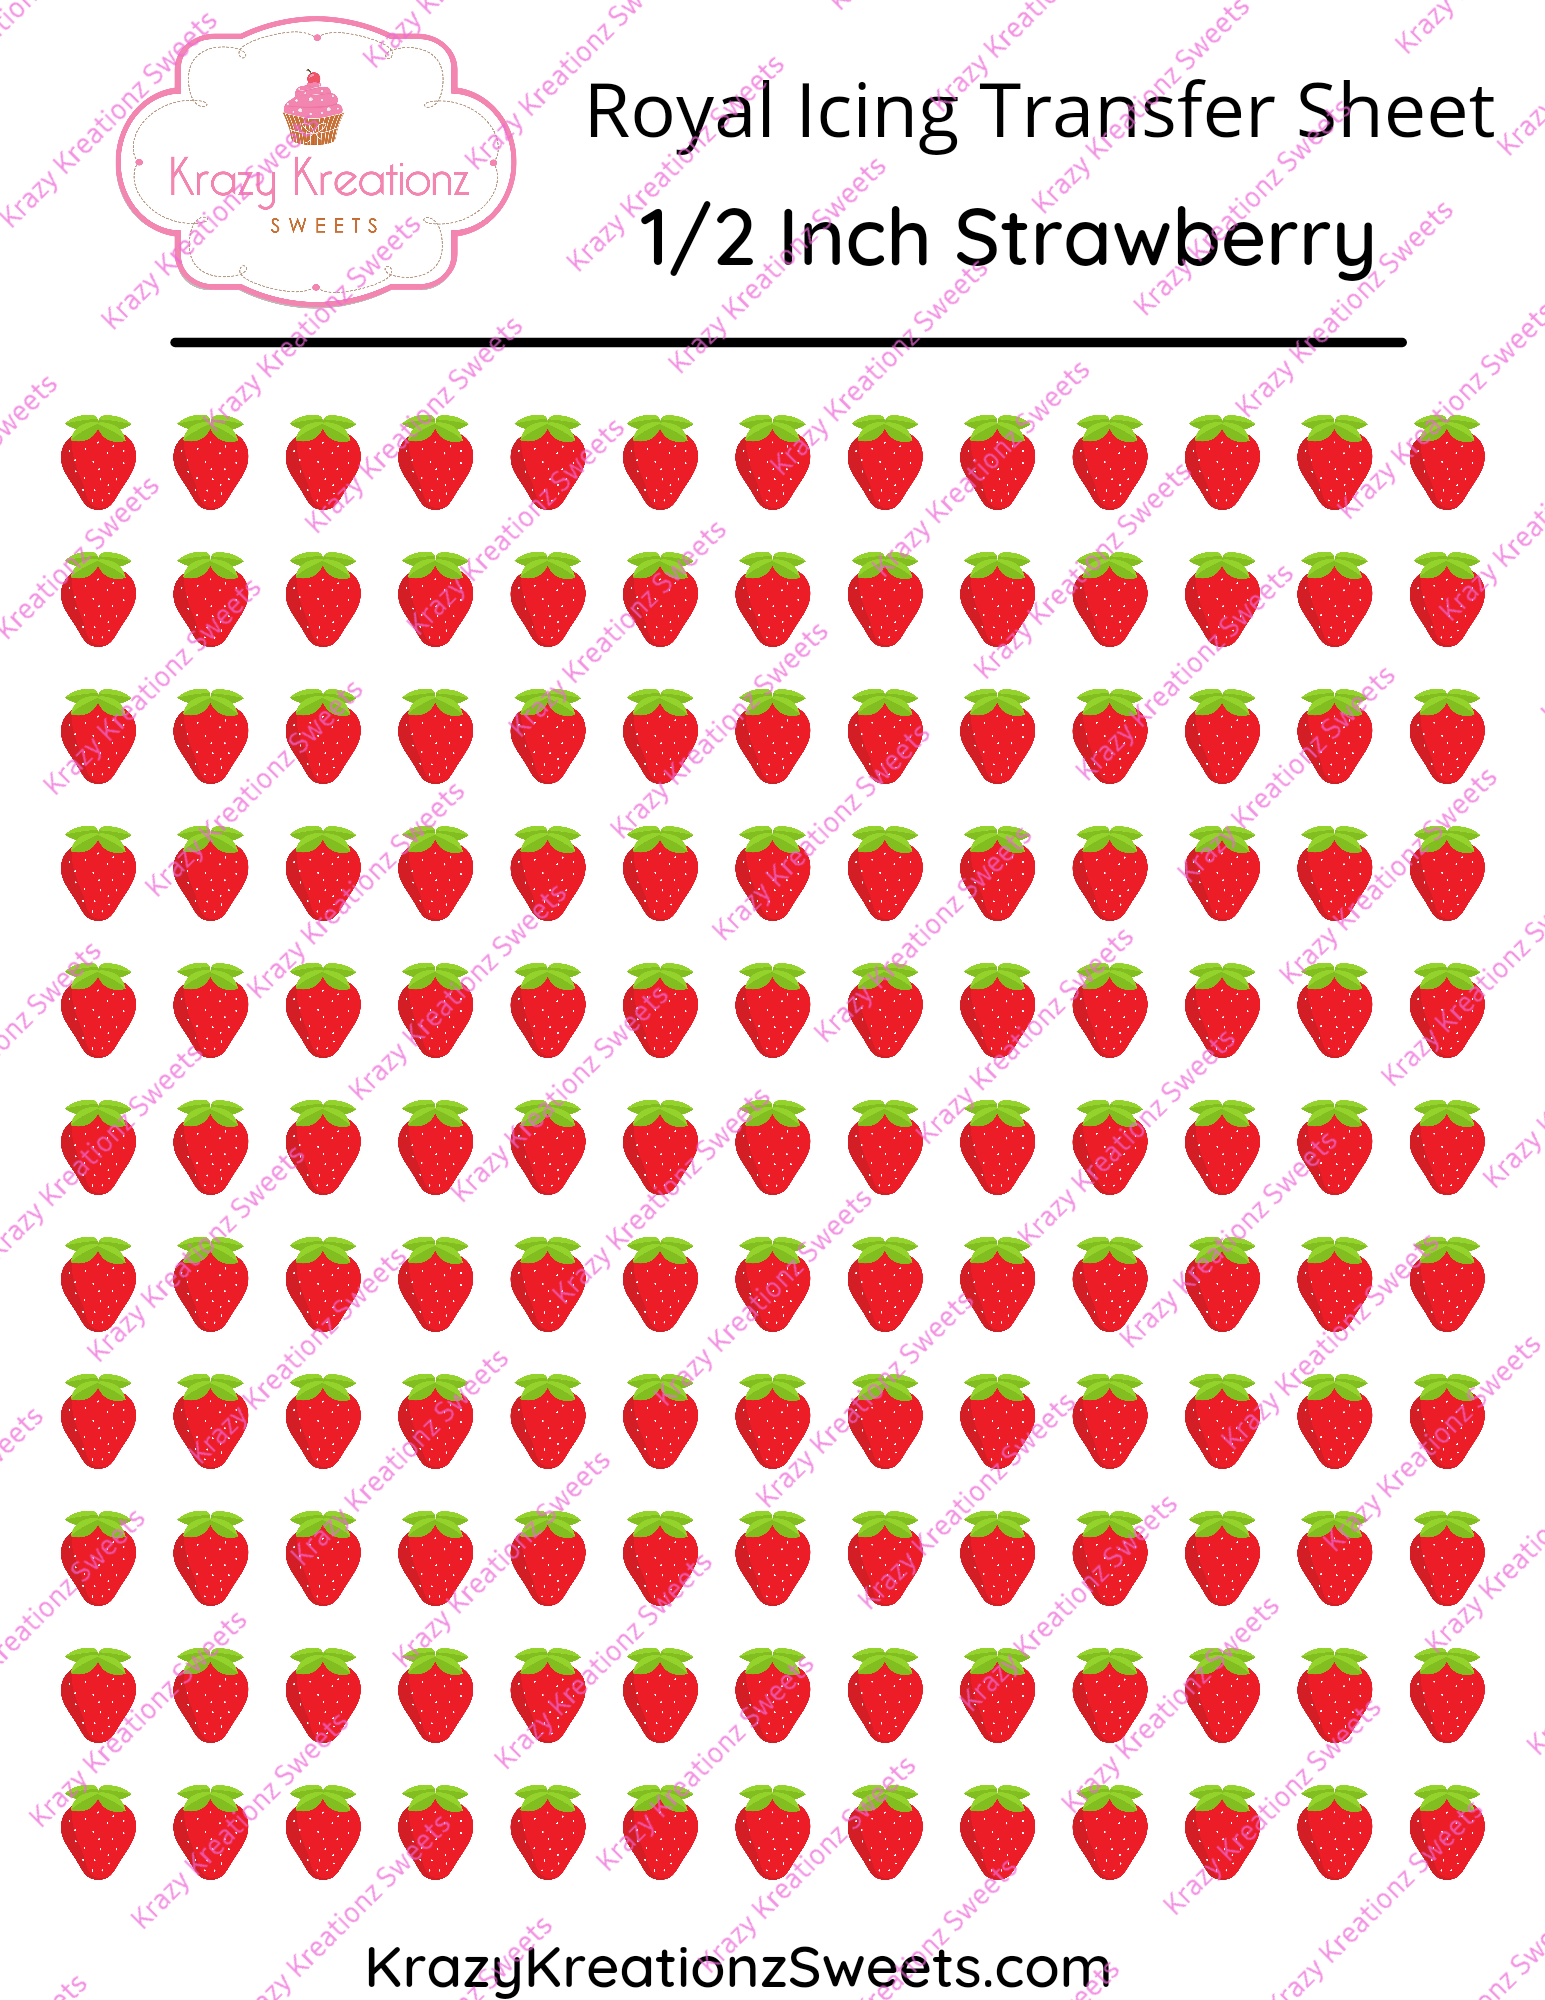 1/2 inch Strawberry Royal Icing Transfer Sheet